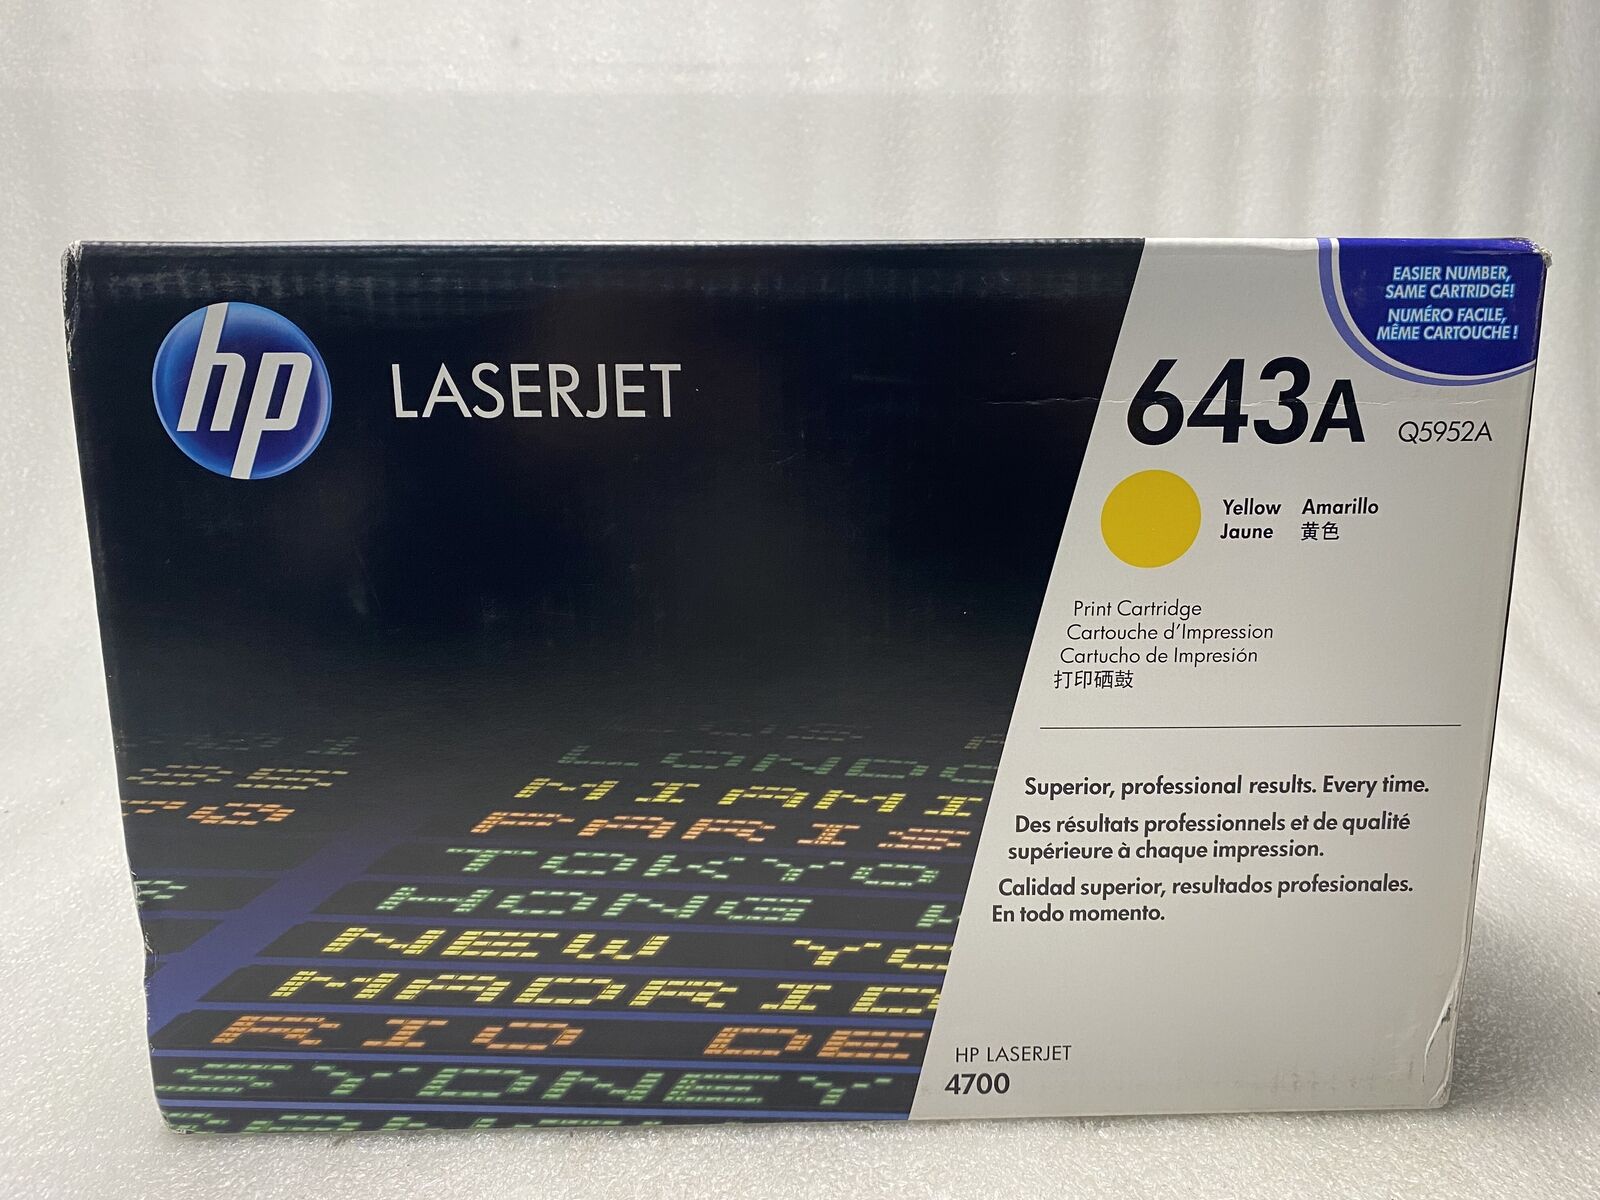 GENUINE HP 643A LaserJet Q5952A Yellow Toner For LaserJet 4700, OEM SEALED BOX